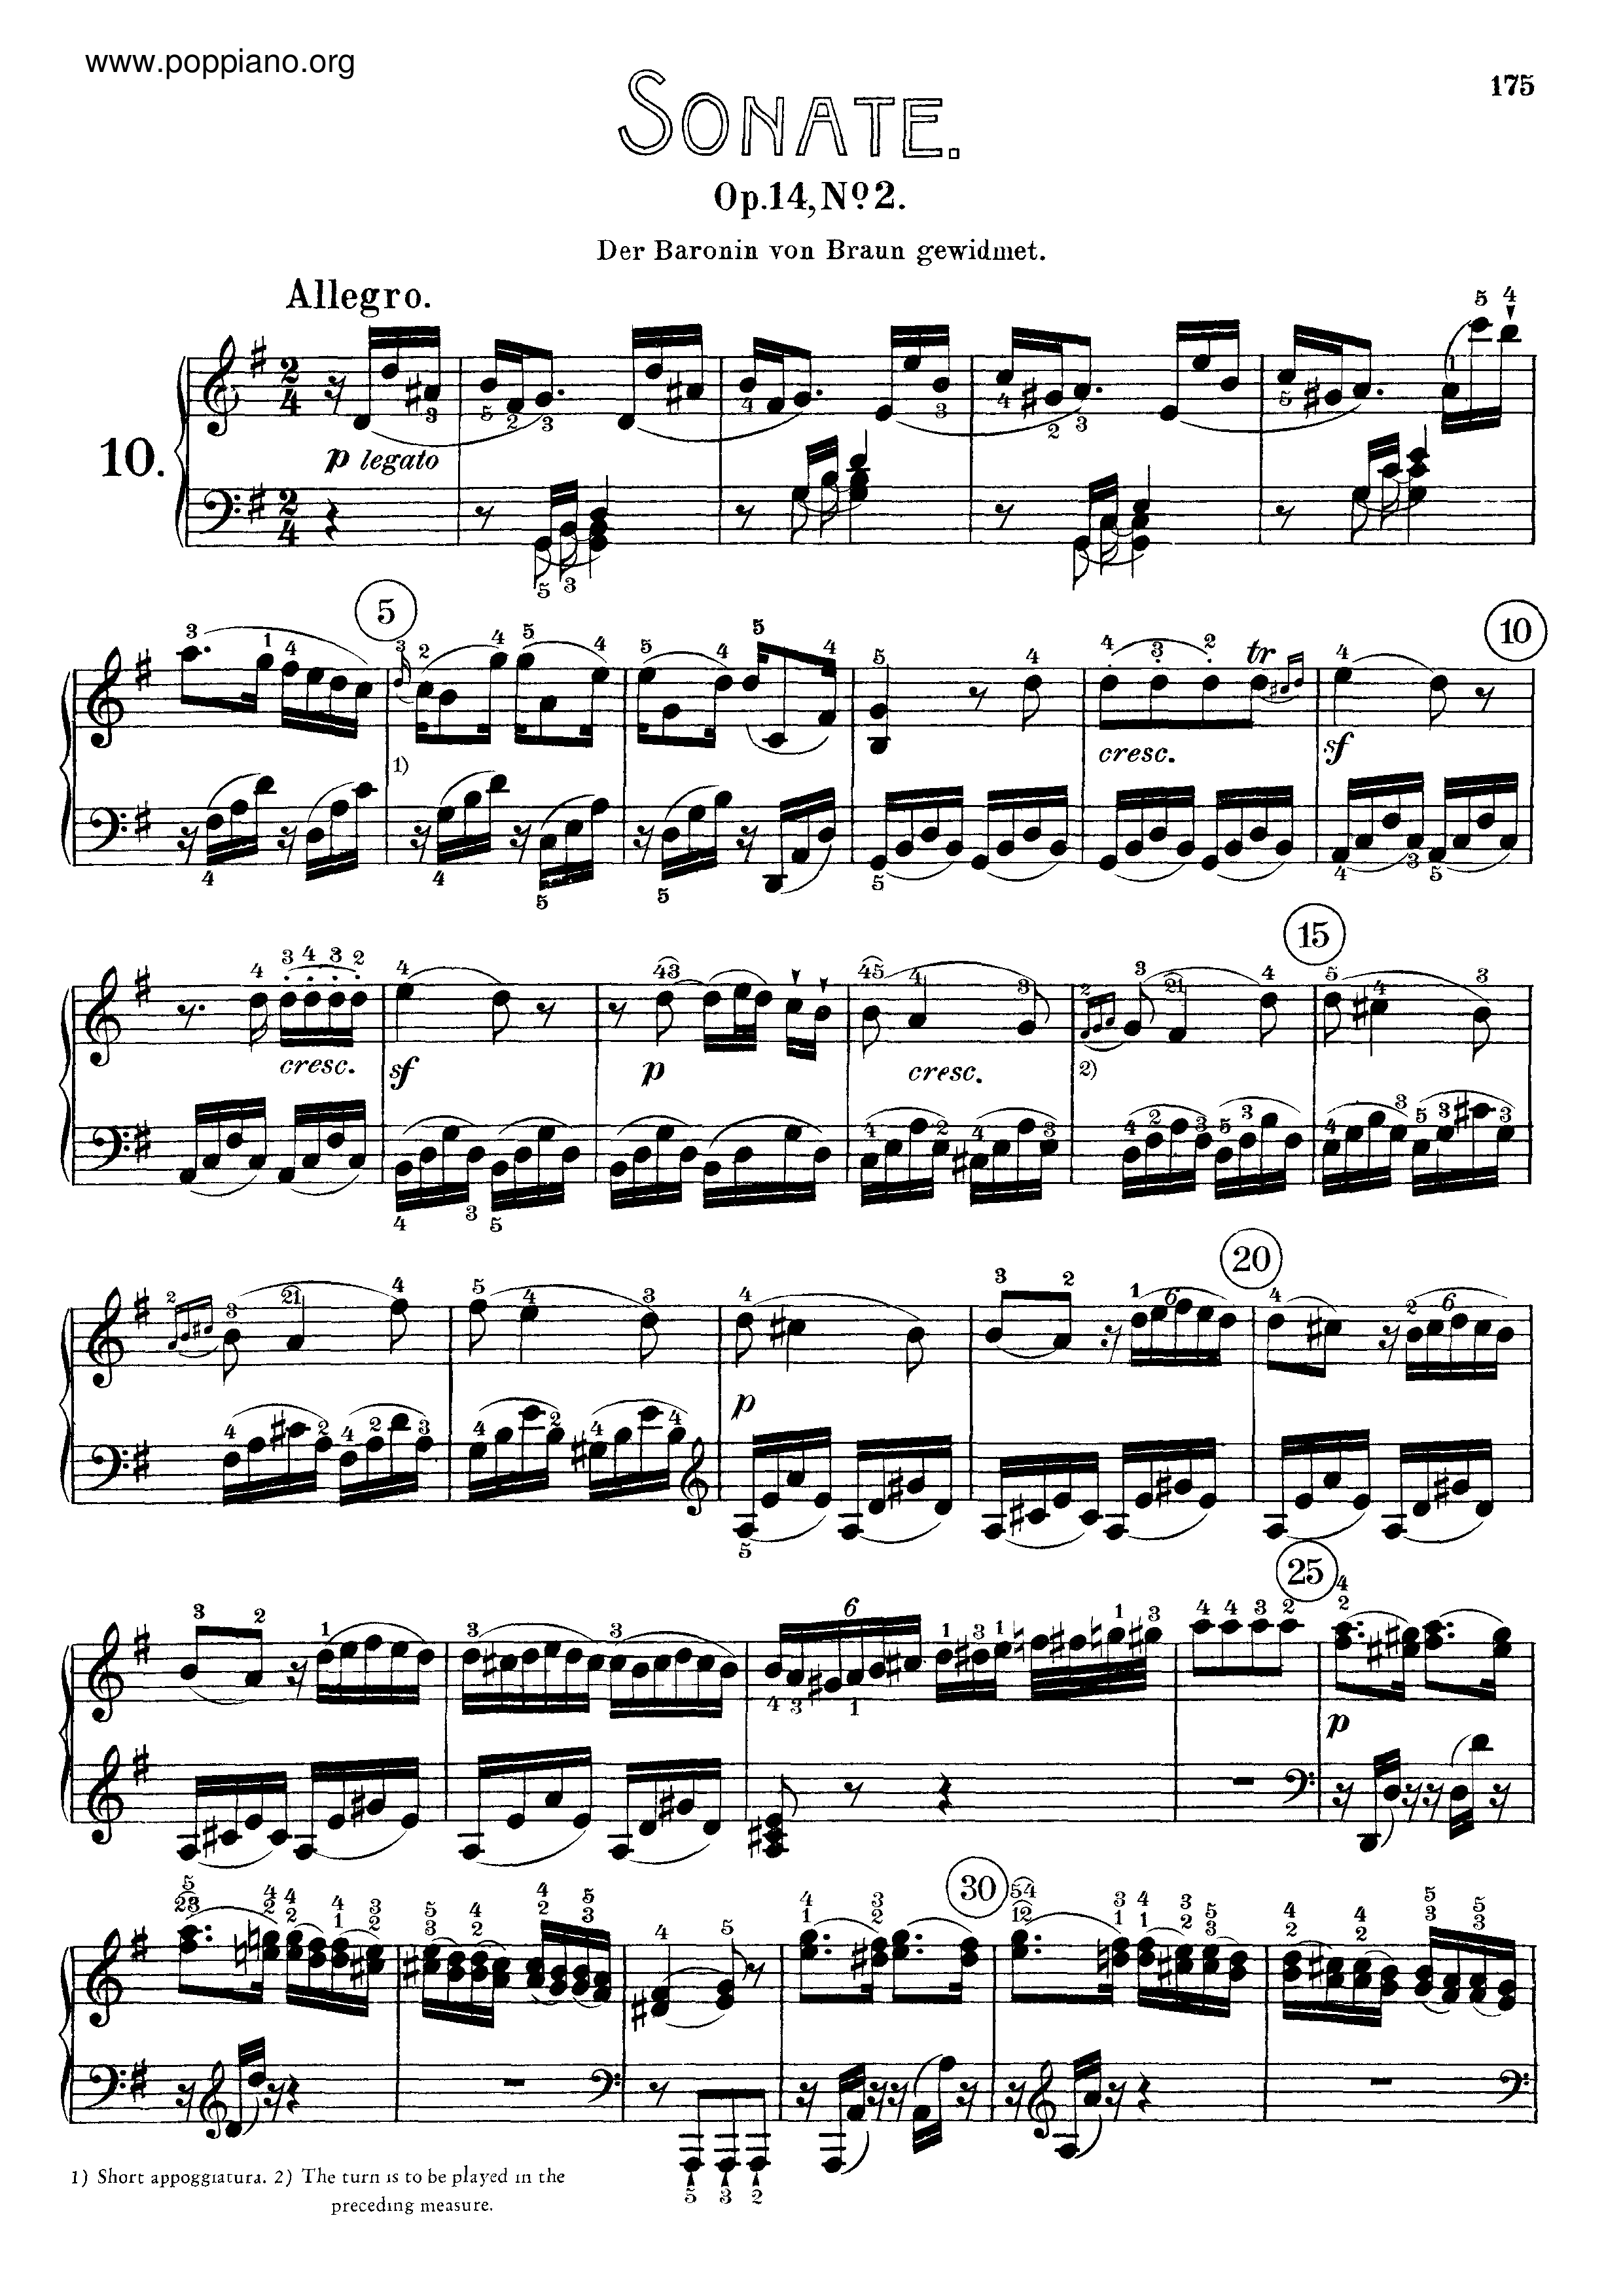 Sonata No. 10 in G major琴谱